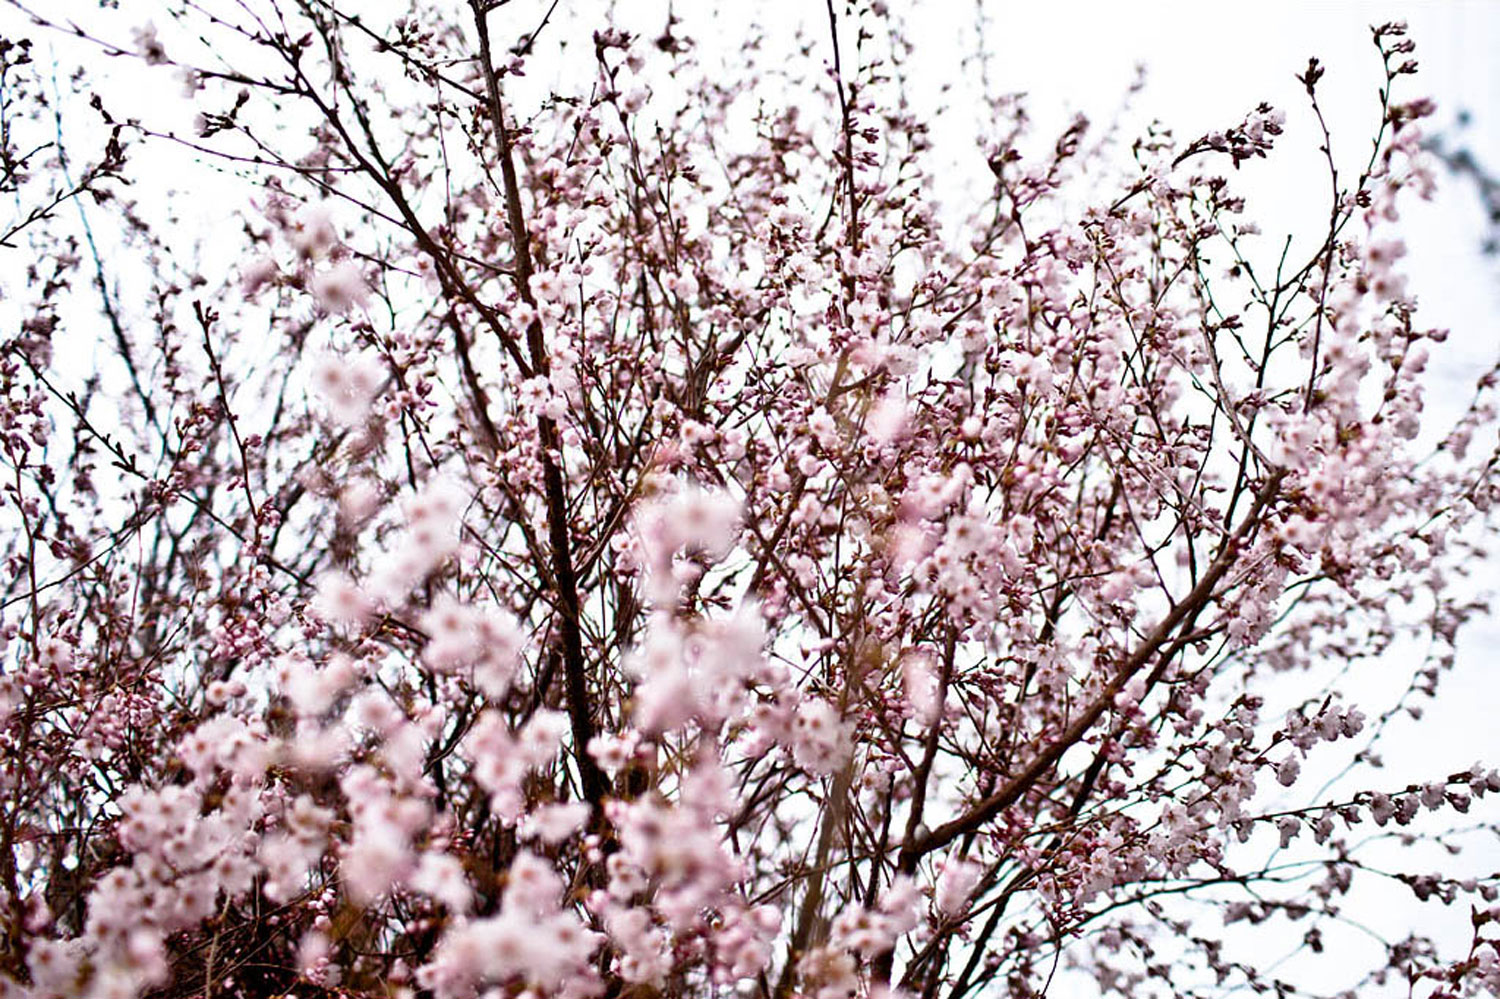 Cherry blossoms near the Fukushima Daiichi Nuclear Power Station.